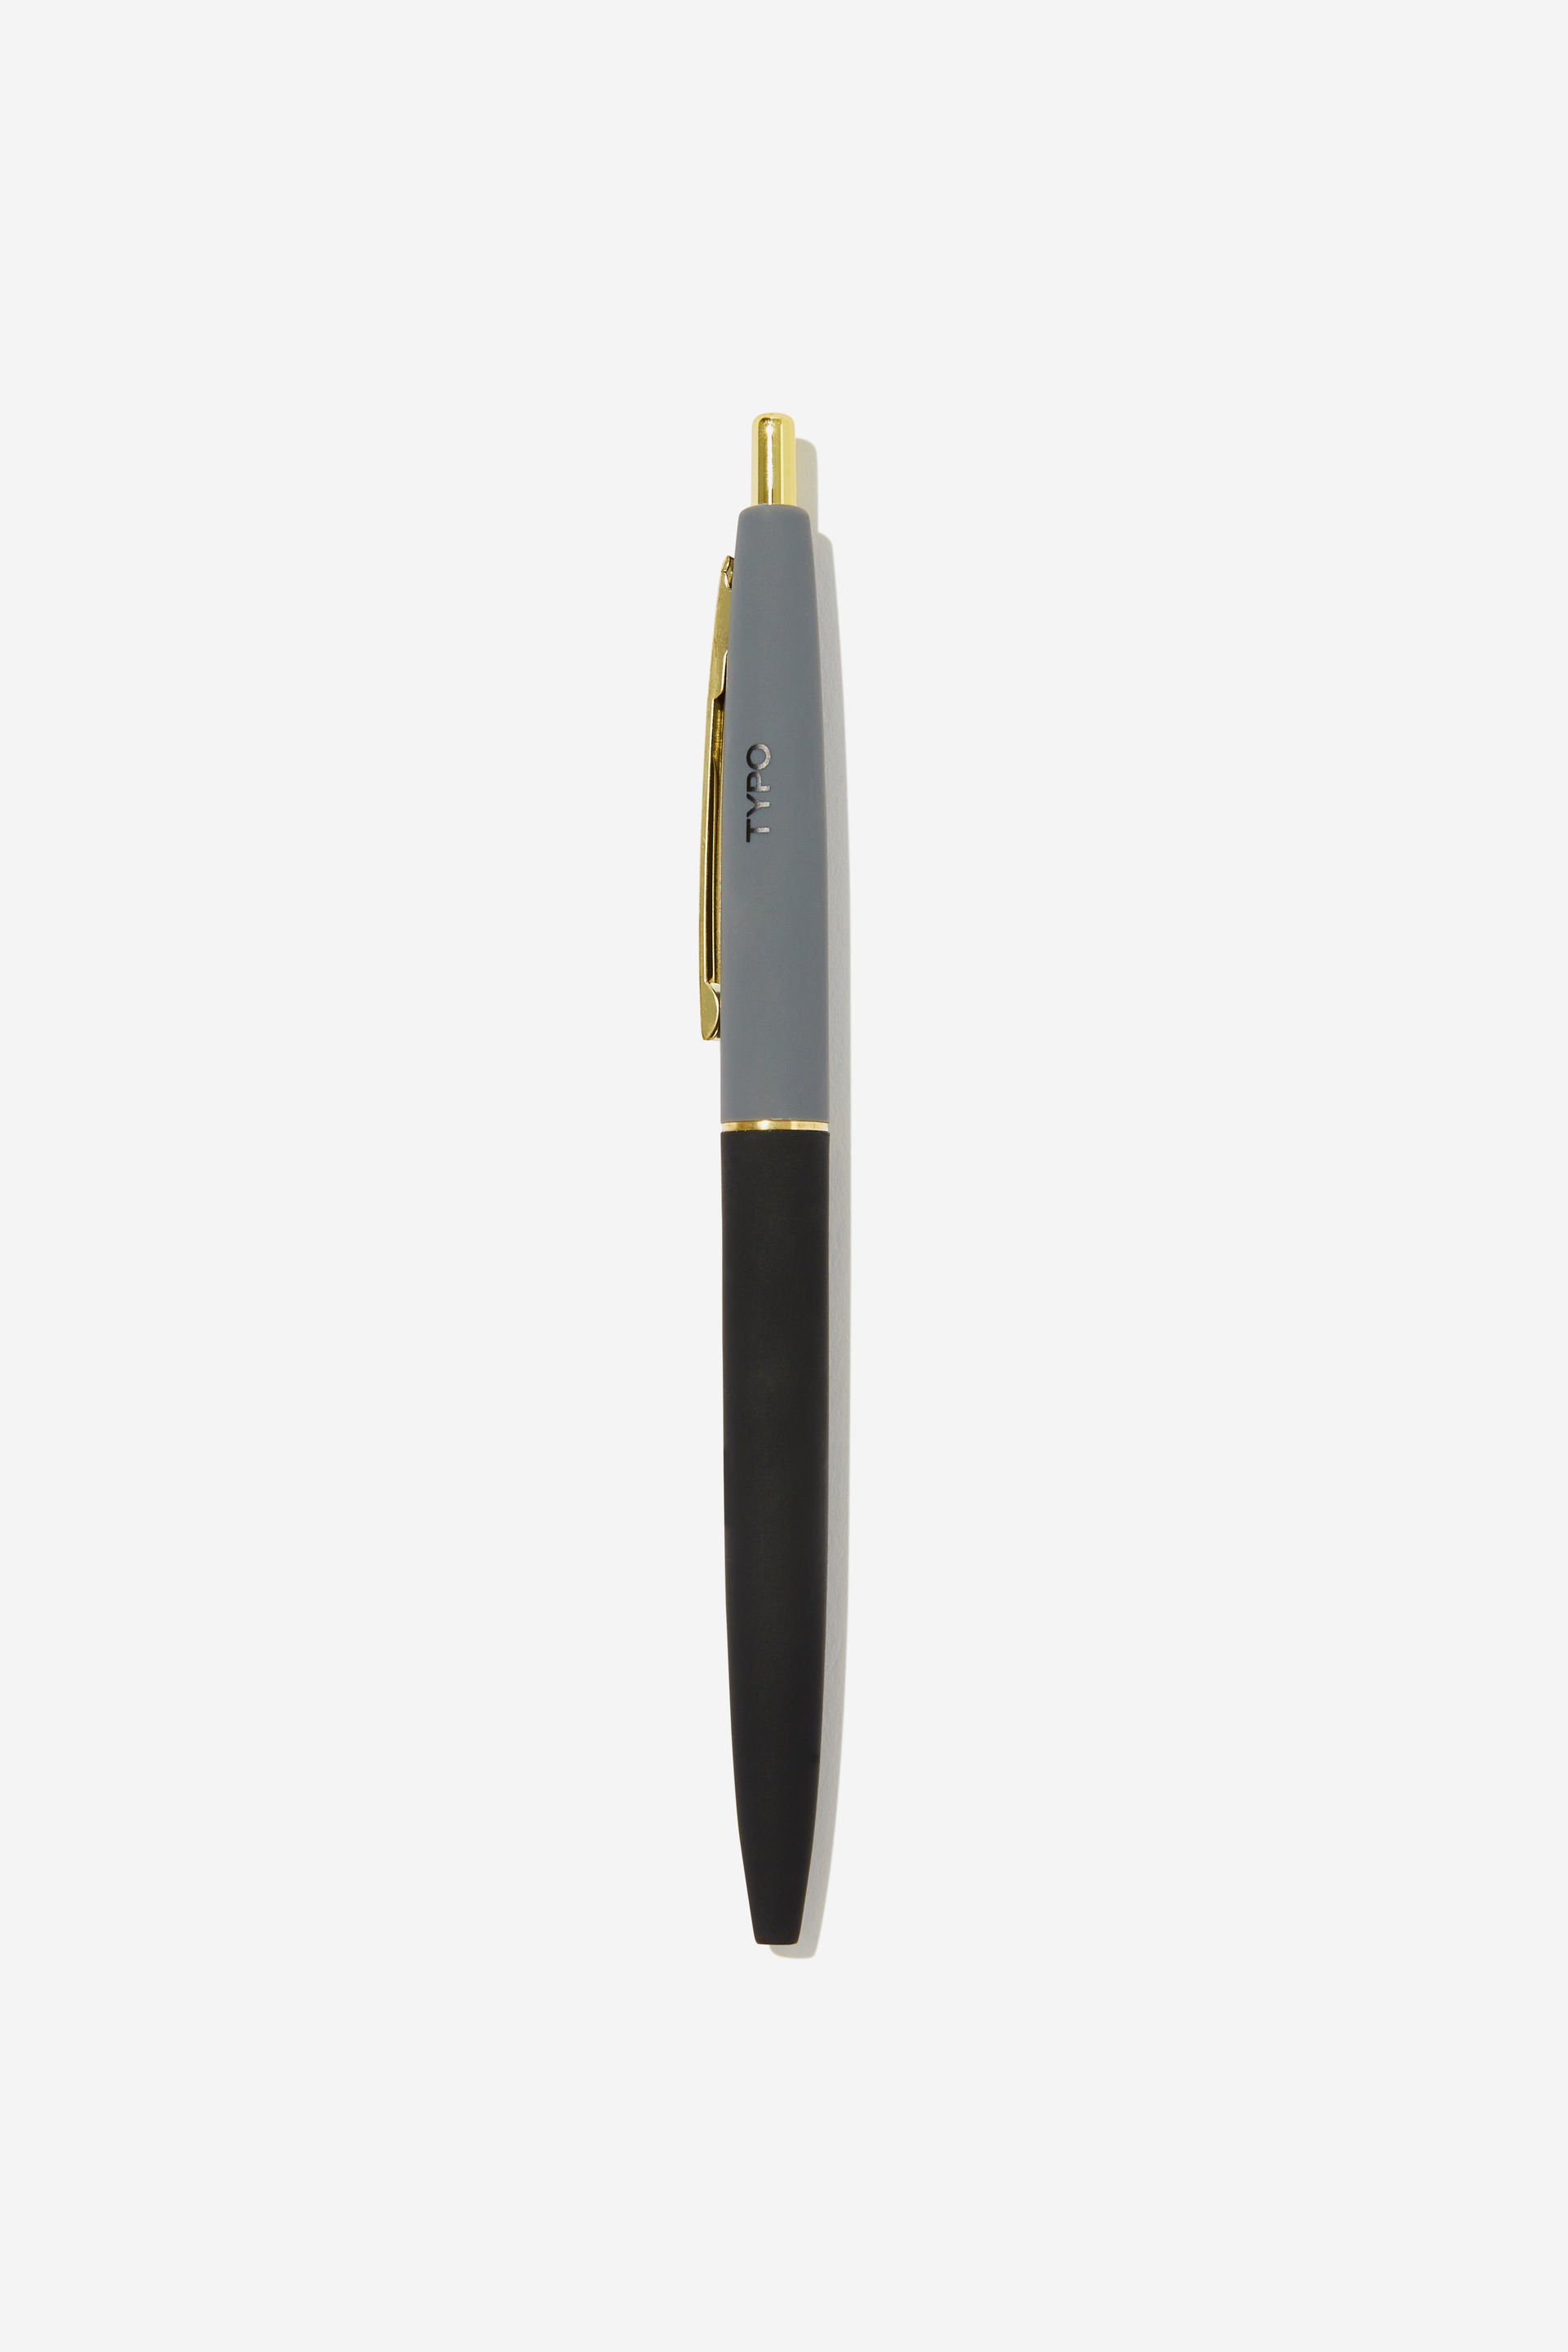 Typo - Essential Colour Block Pen - Tonal black and grey